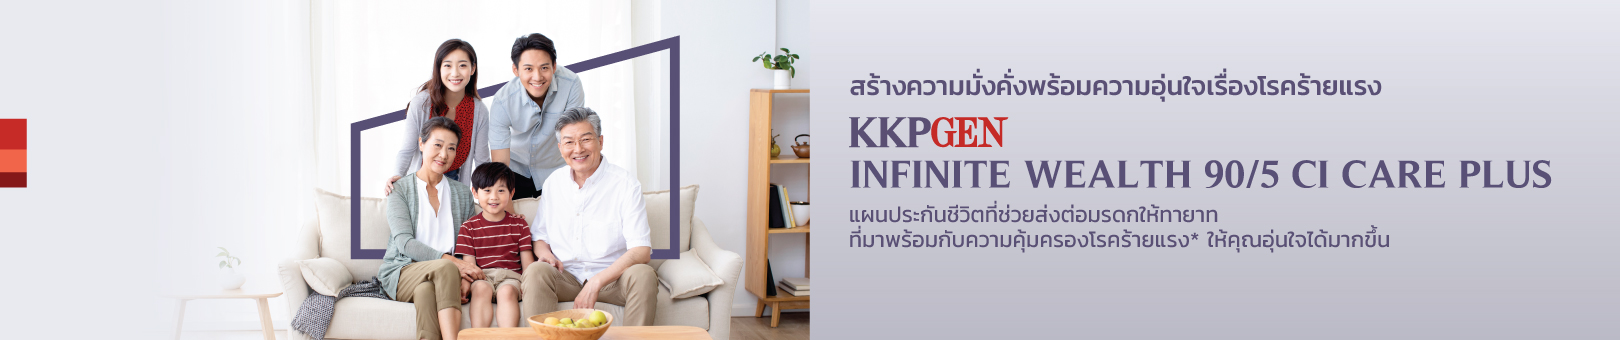 KKPGEN-Infinite-Wealth-905-CI_Web_1620x340